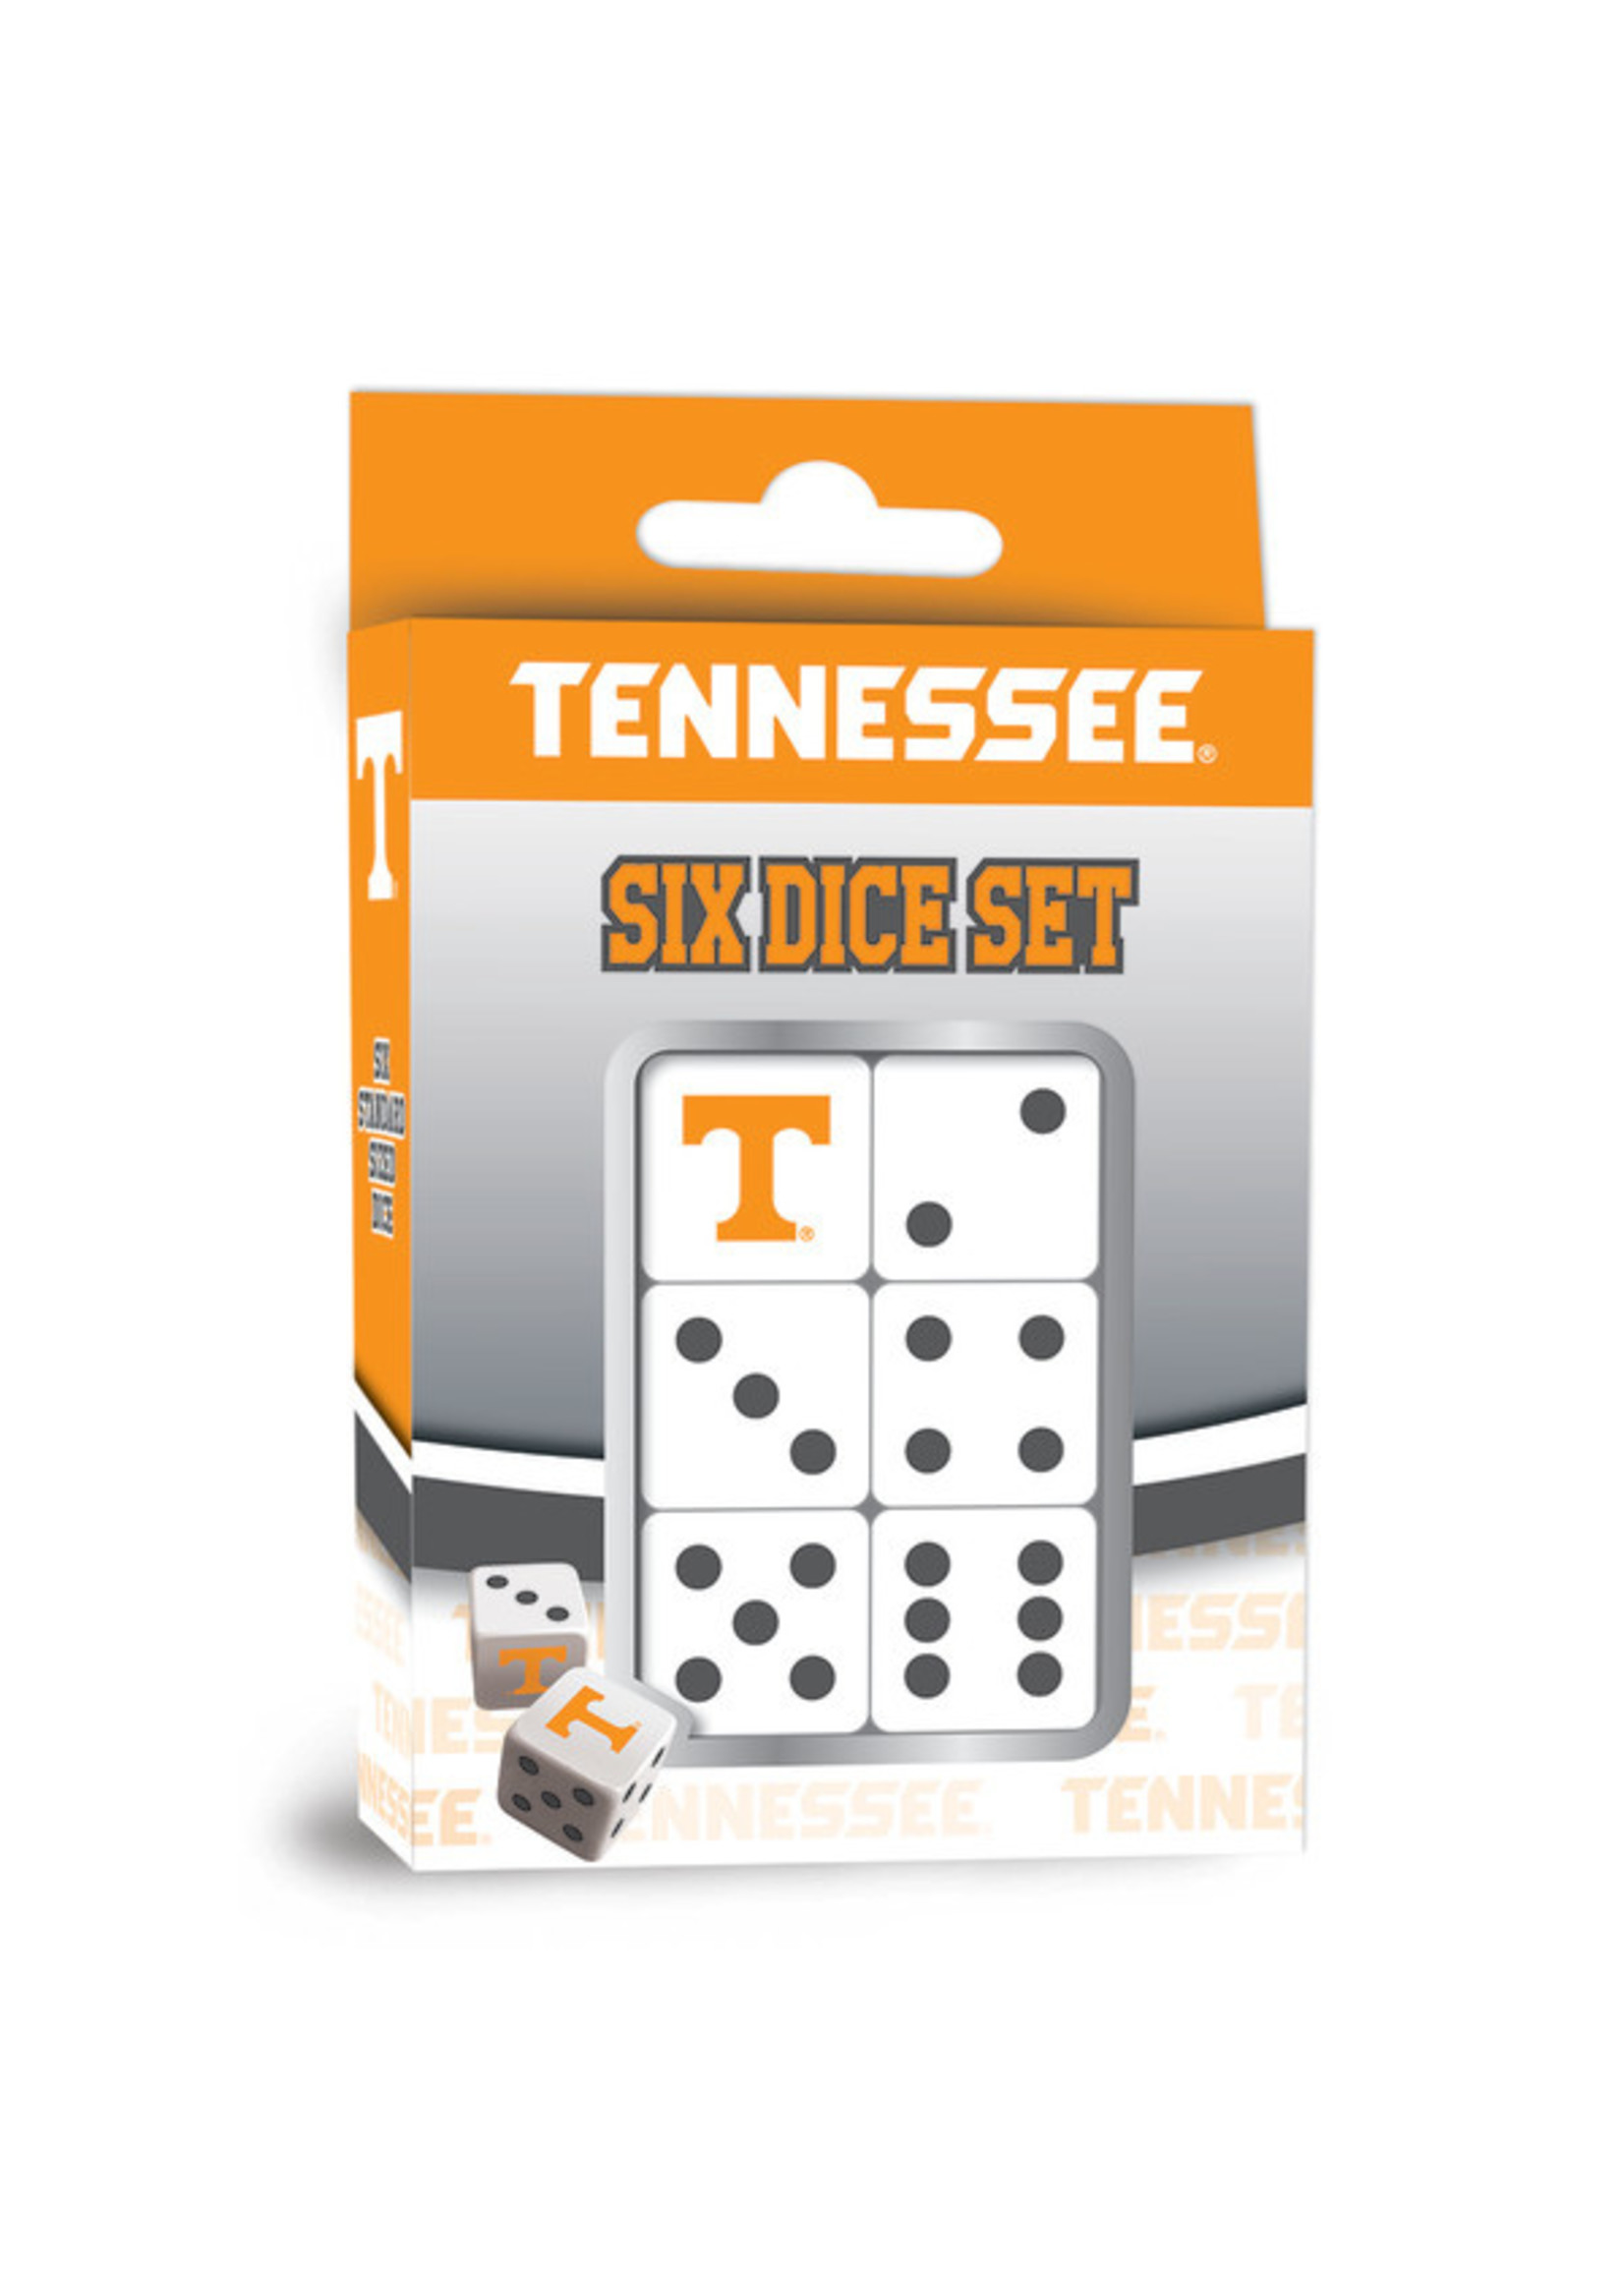 Tennessee Dice Set